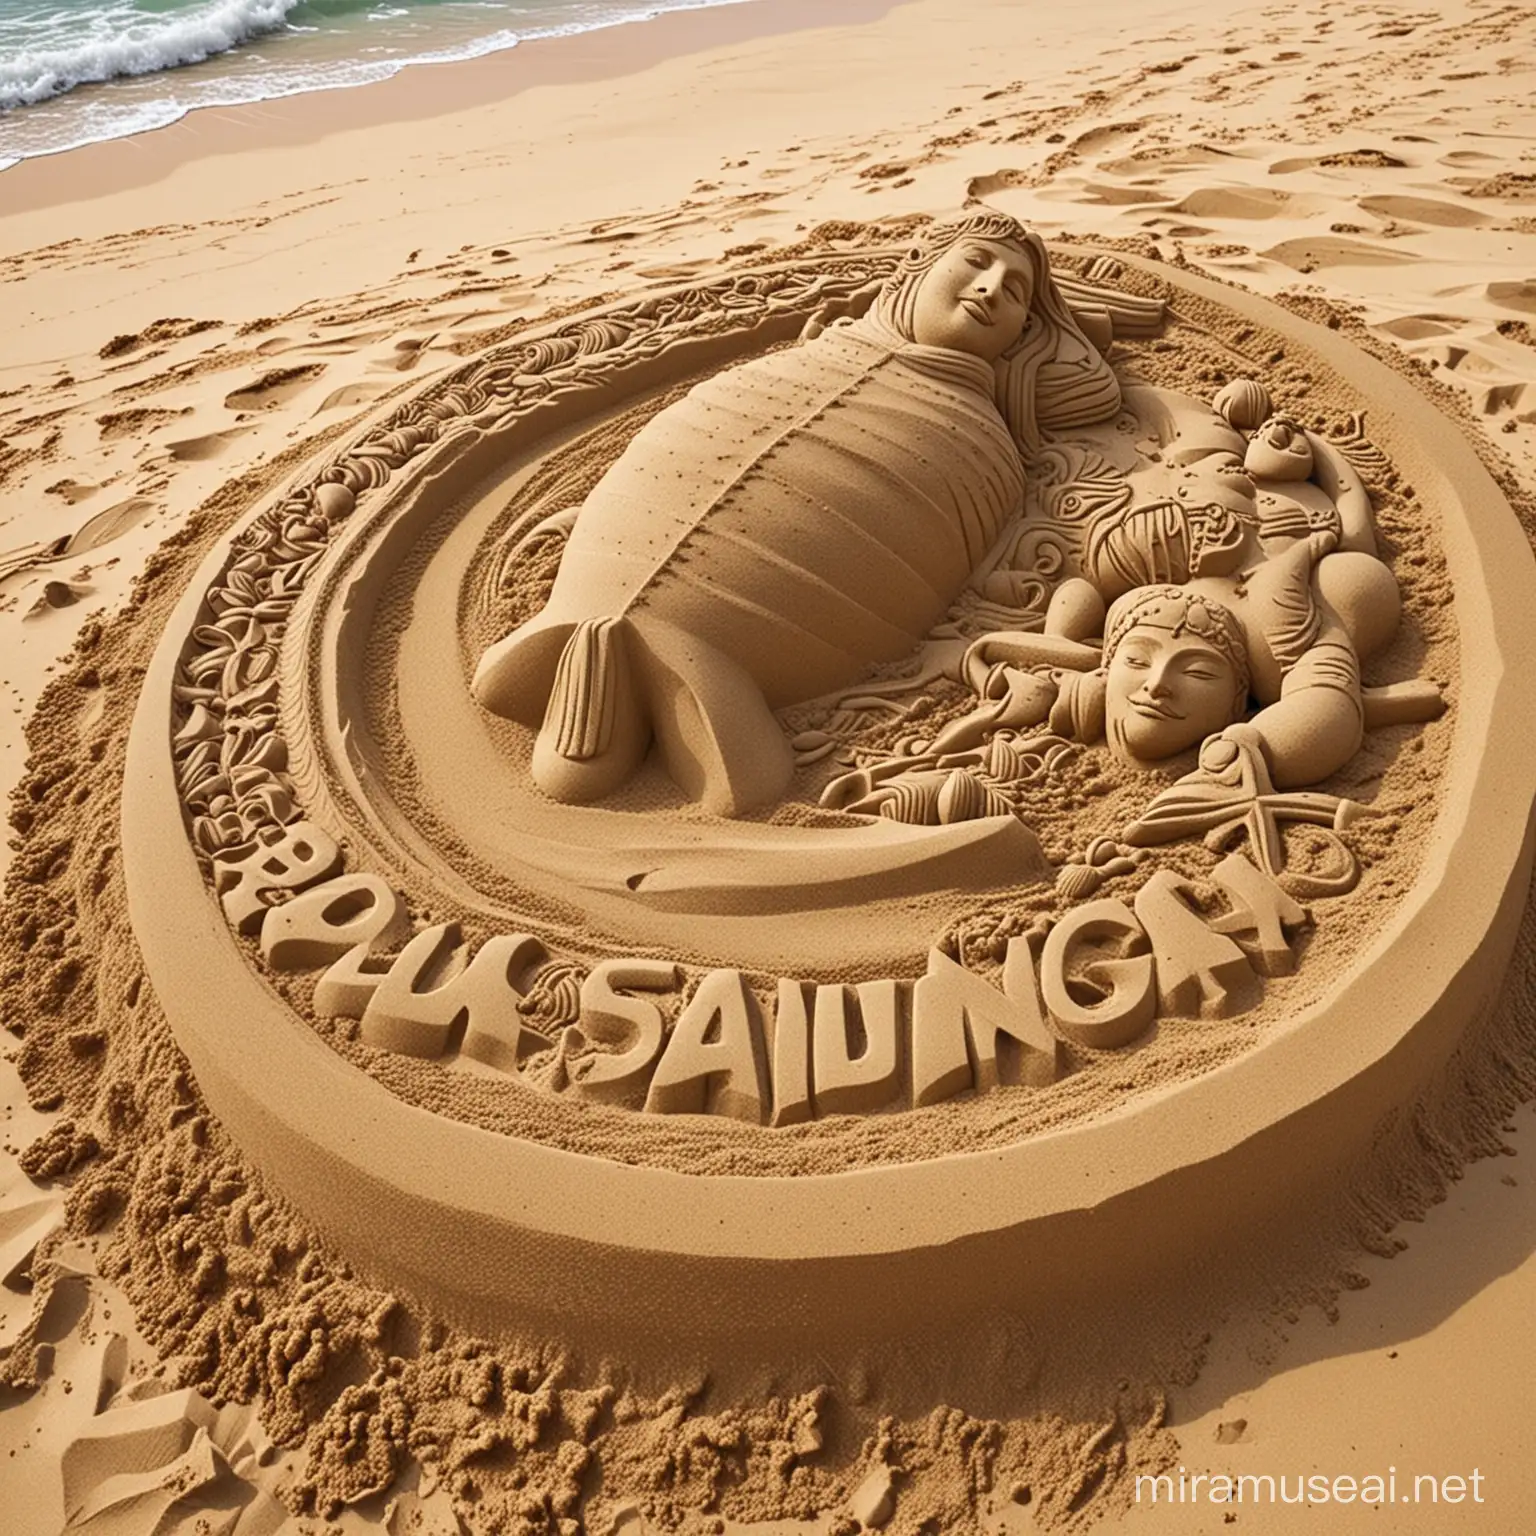 Exquisite 3D Sand Sculpture on Beach High Definition Photography